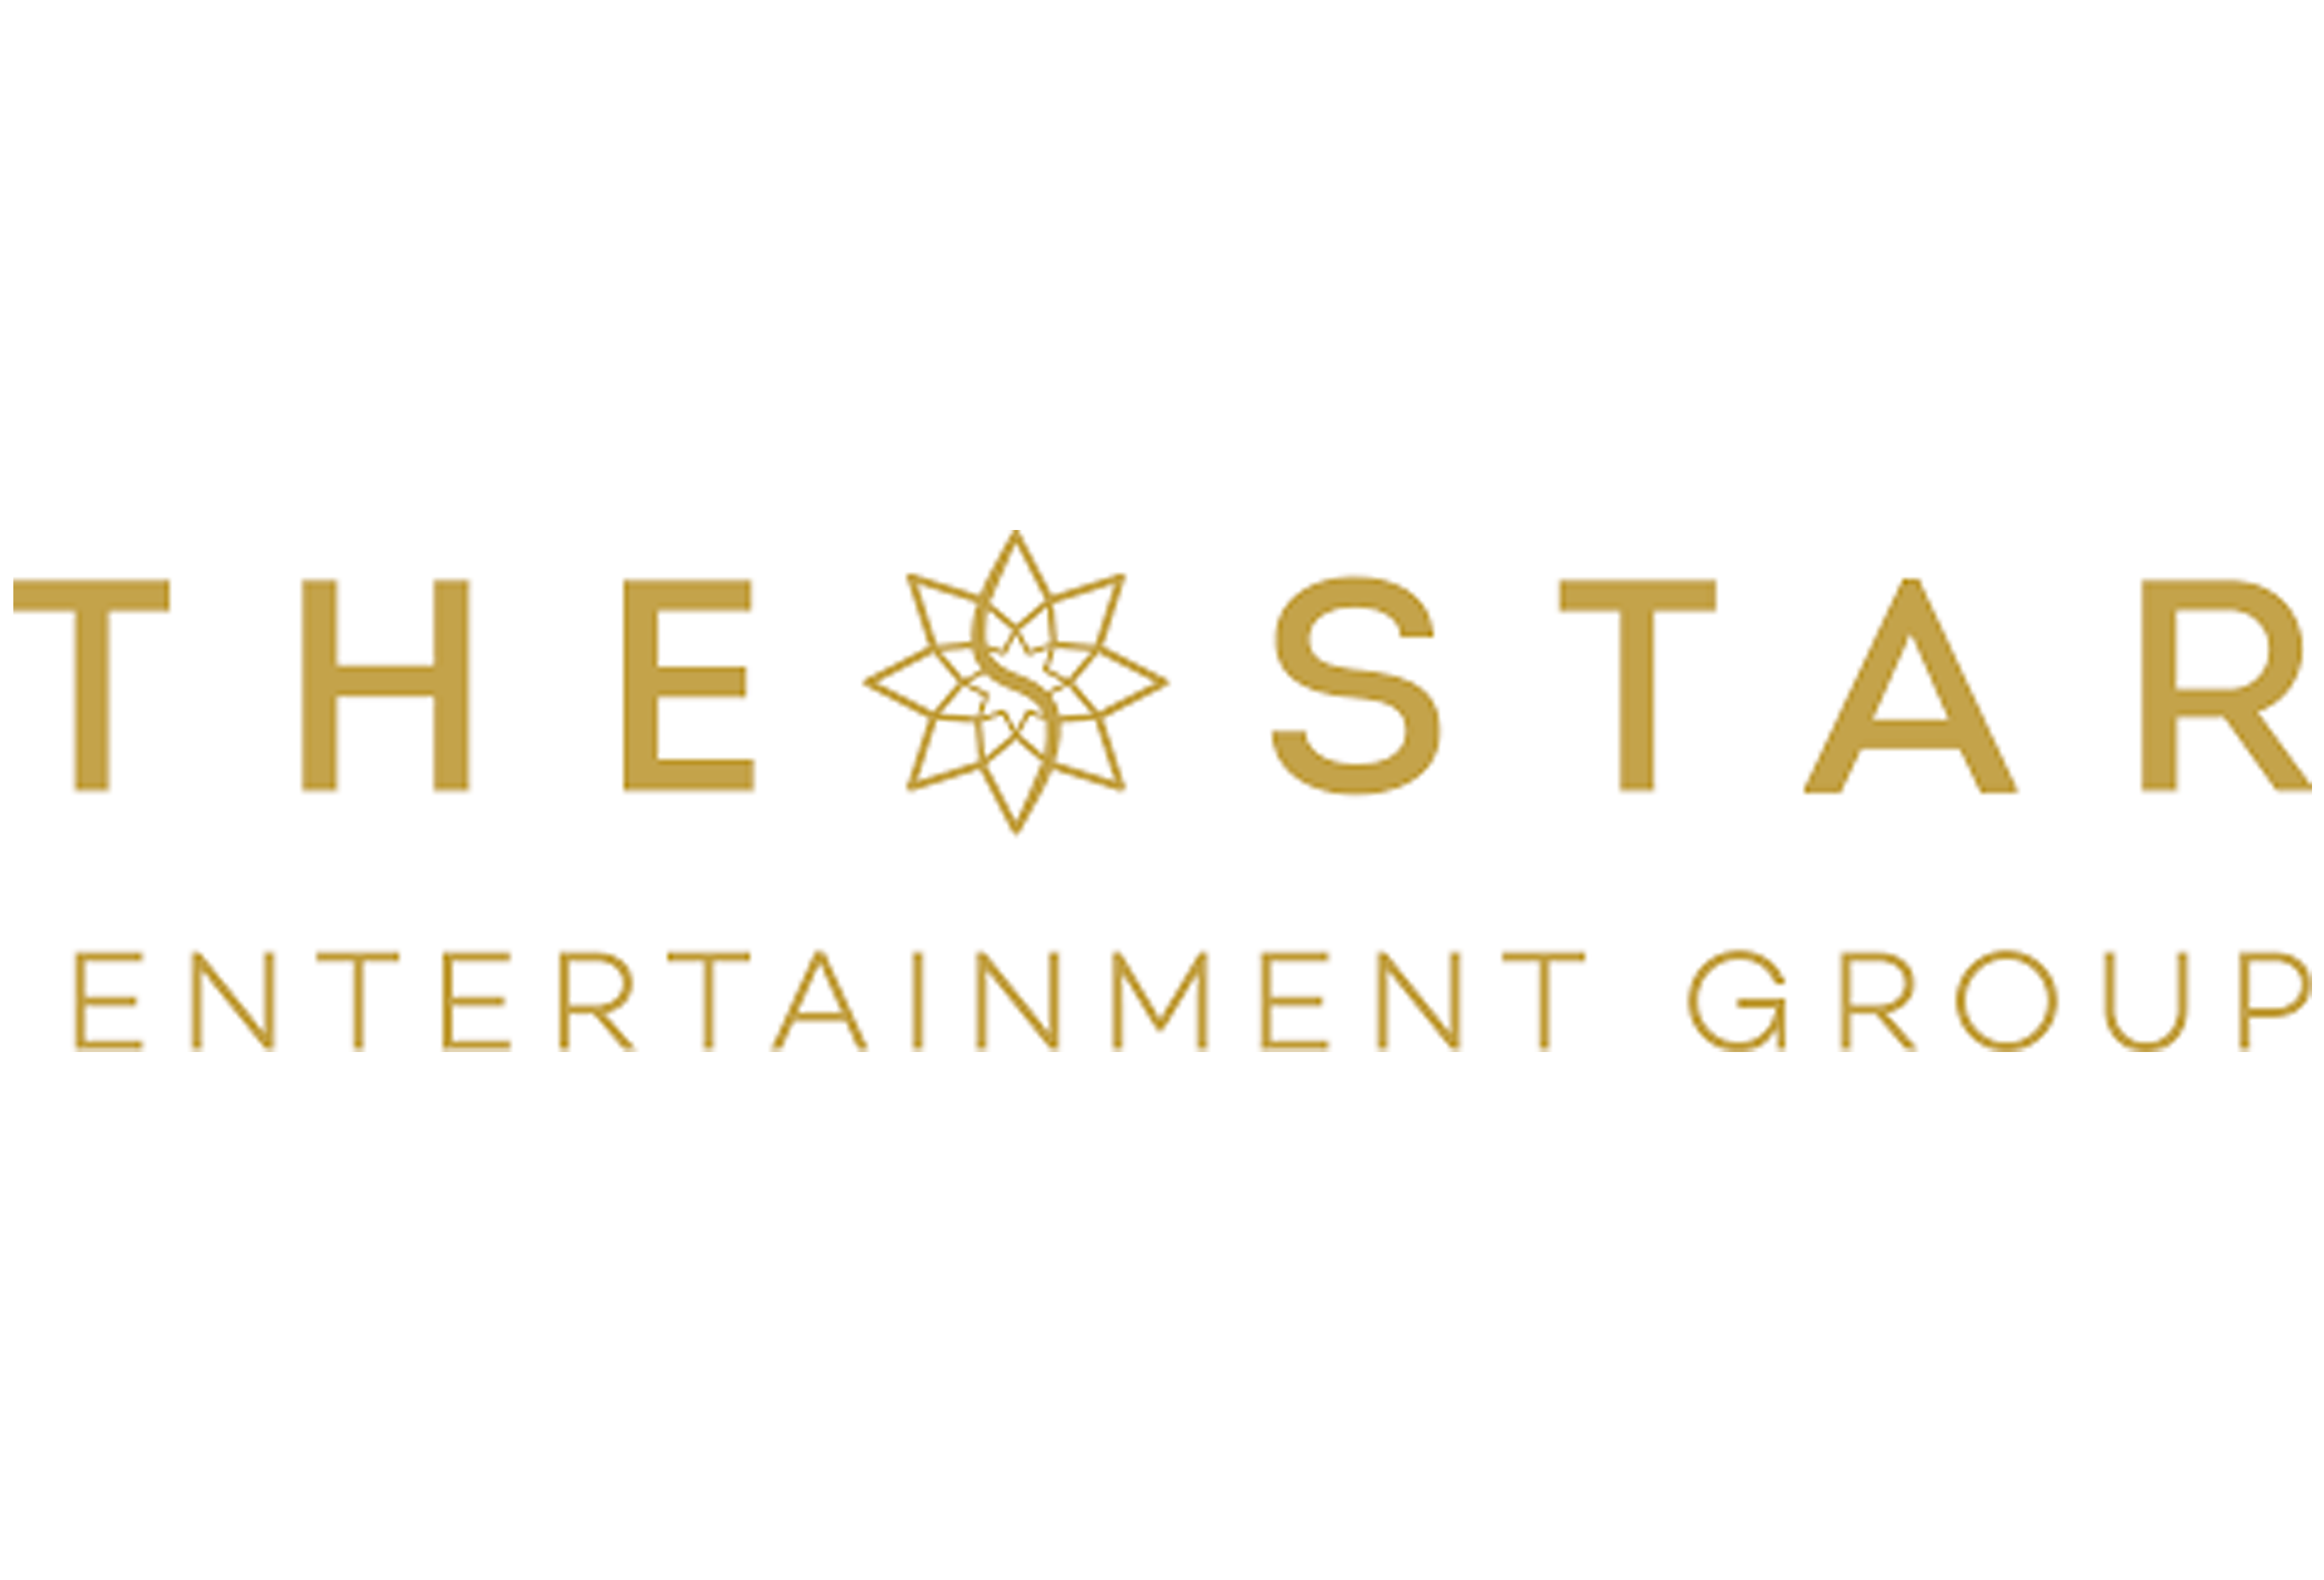 Thestar Entertainment